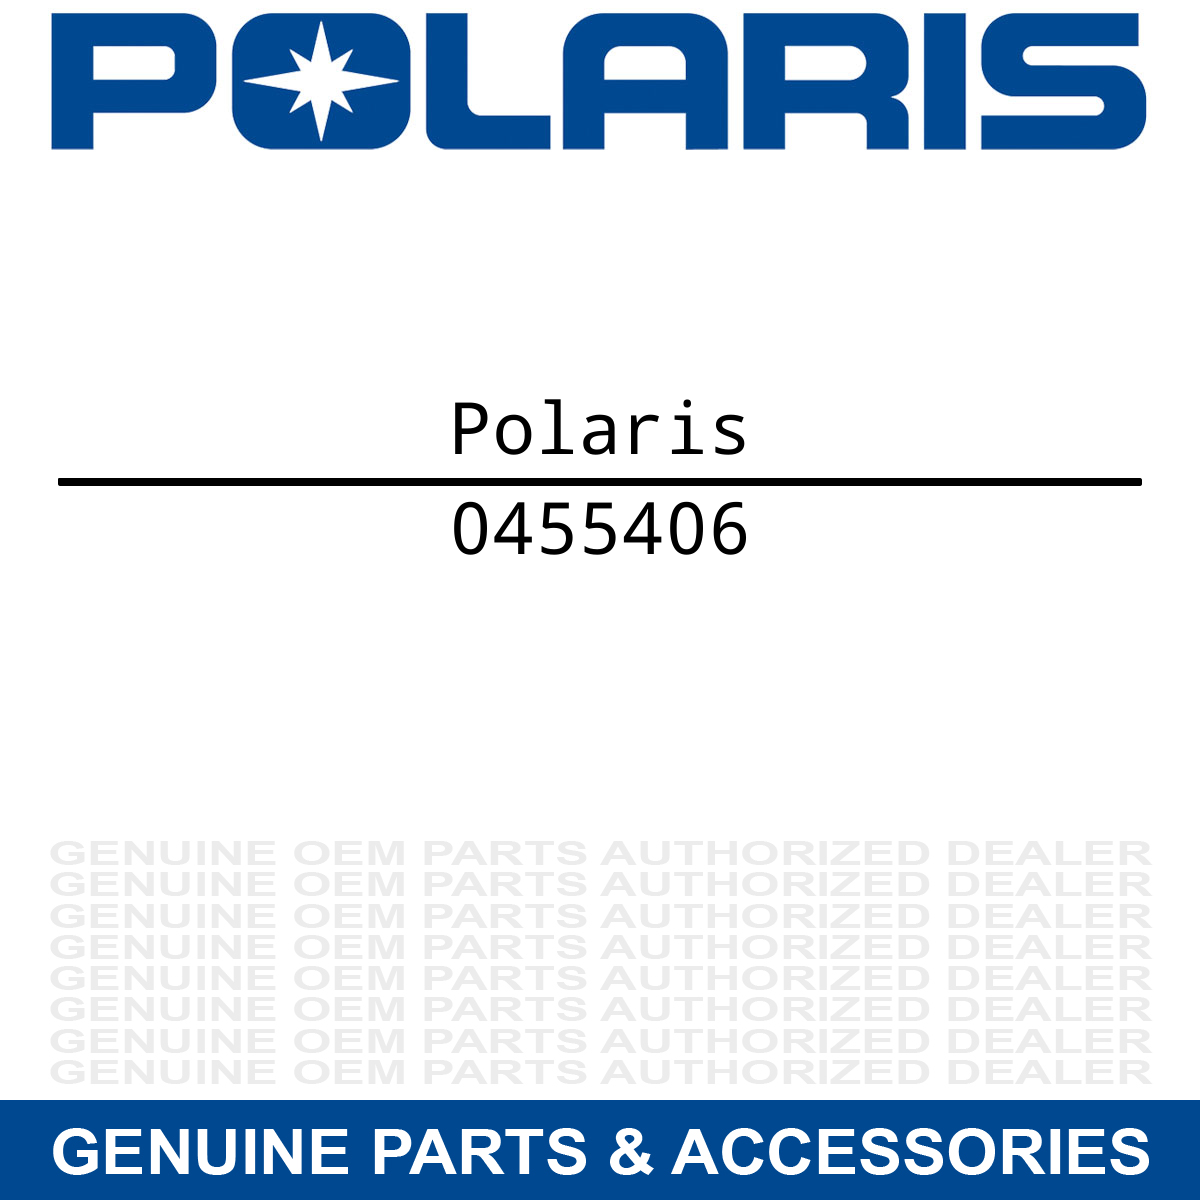 Polaris 0455406 Exhaust Gasket Sportsman Predator Outlaw 50 90